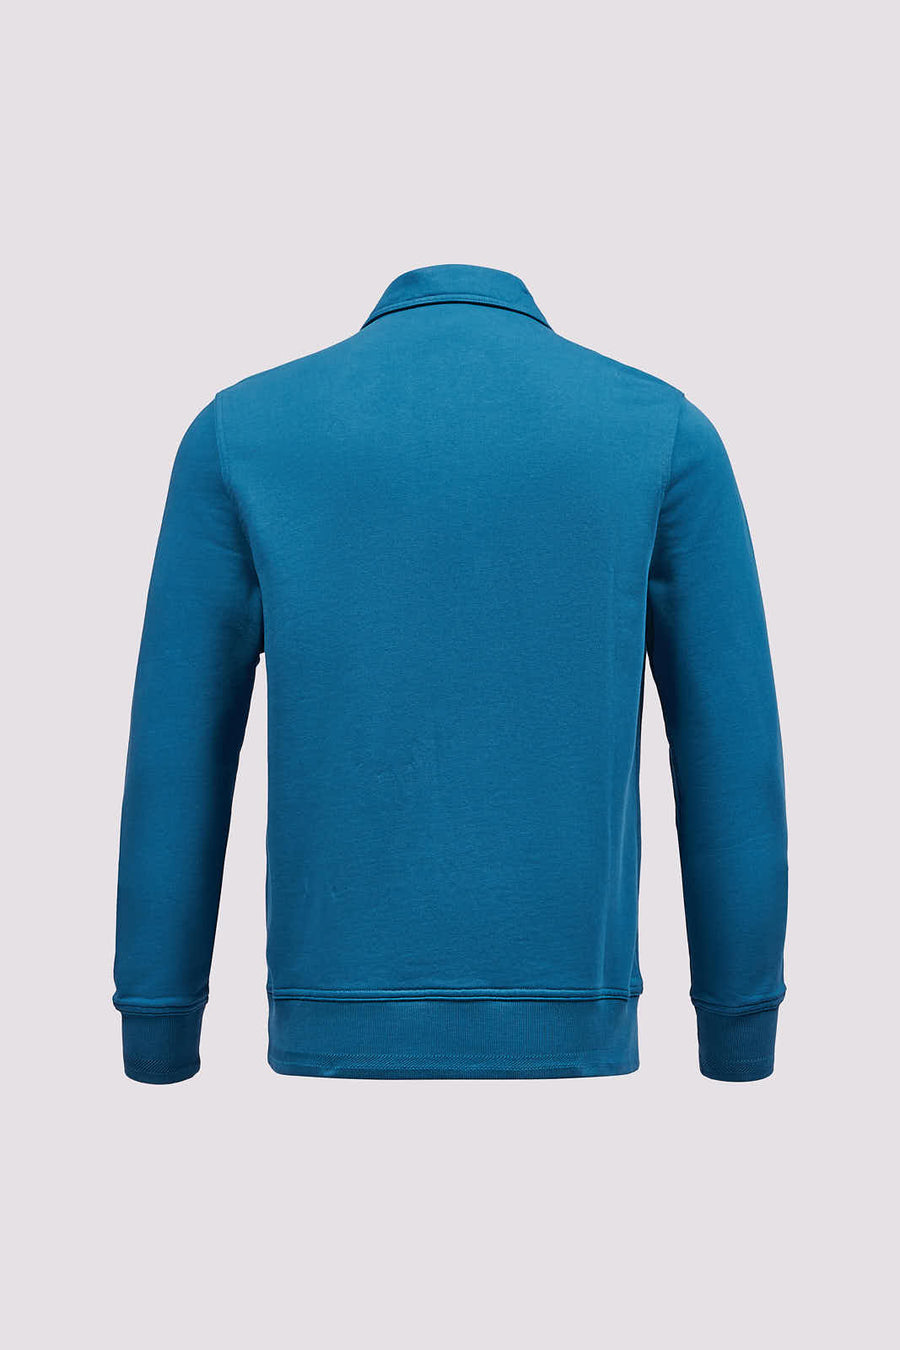 French Terry 1/4 Zip Collar Sweatshirt in Teal Blue